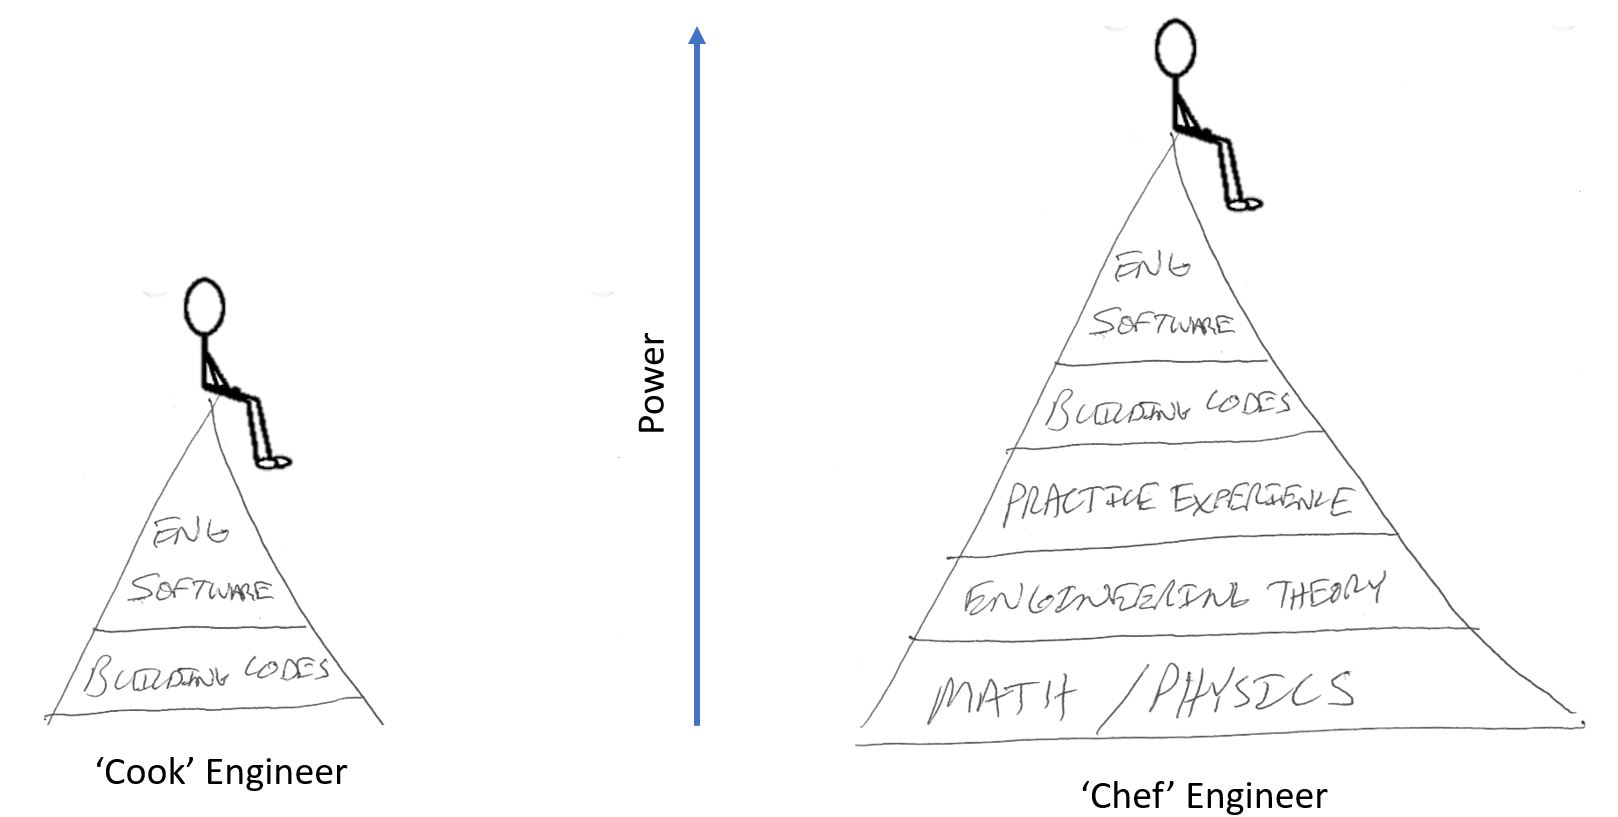 Cook Engineer vs Chef Engineer